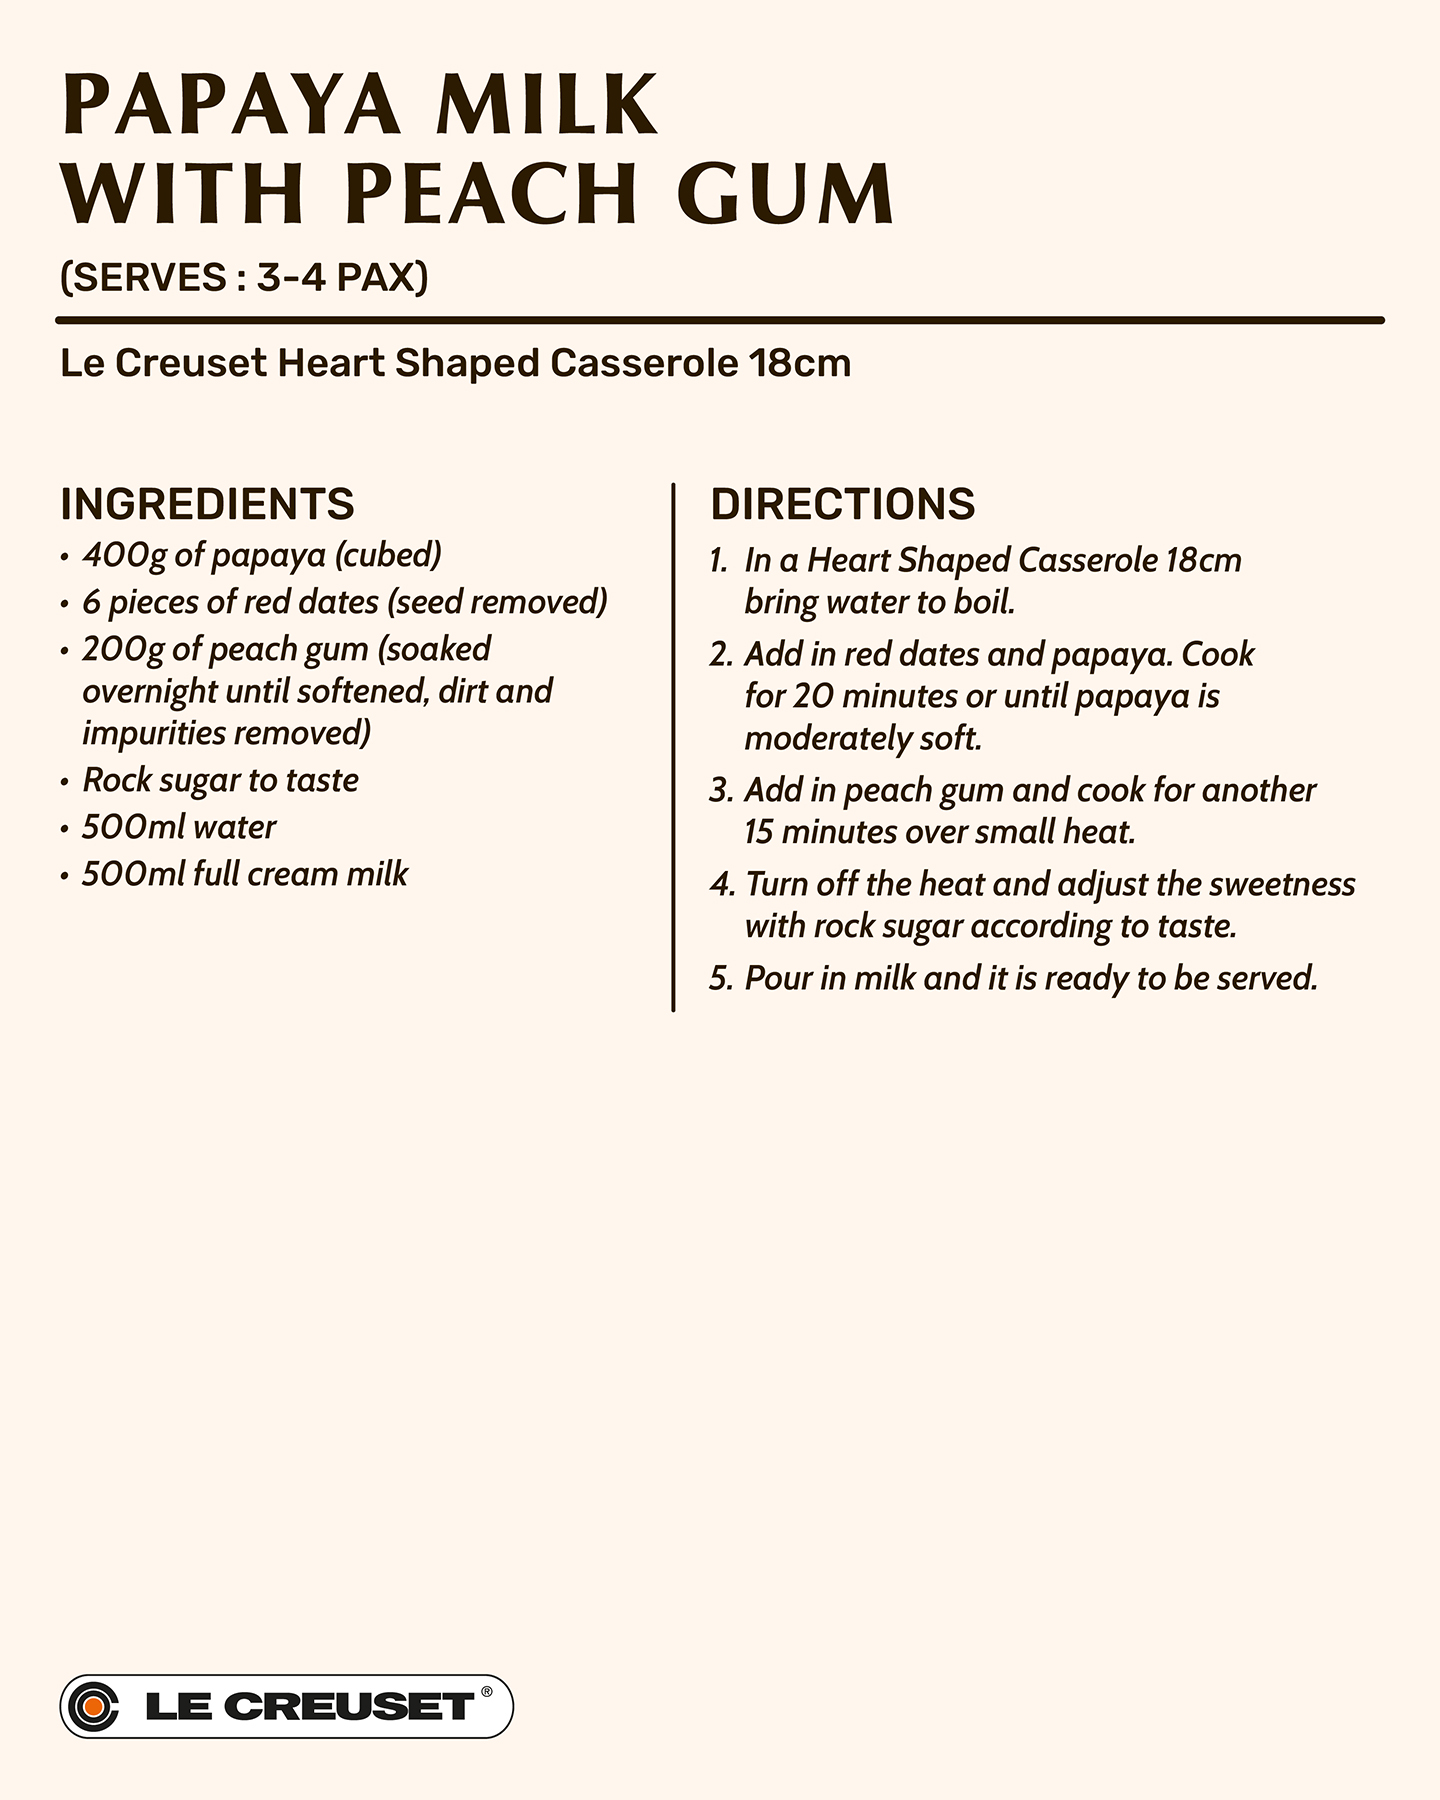 Papaya Milk with Peach Gum